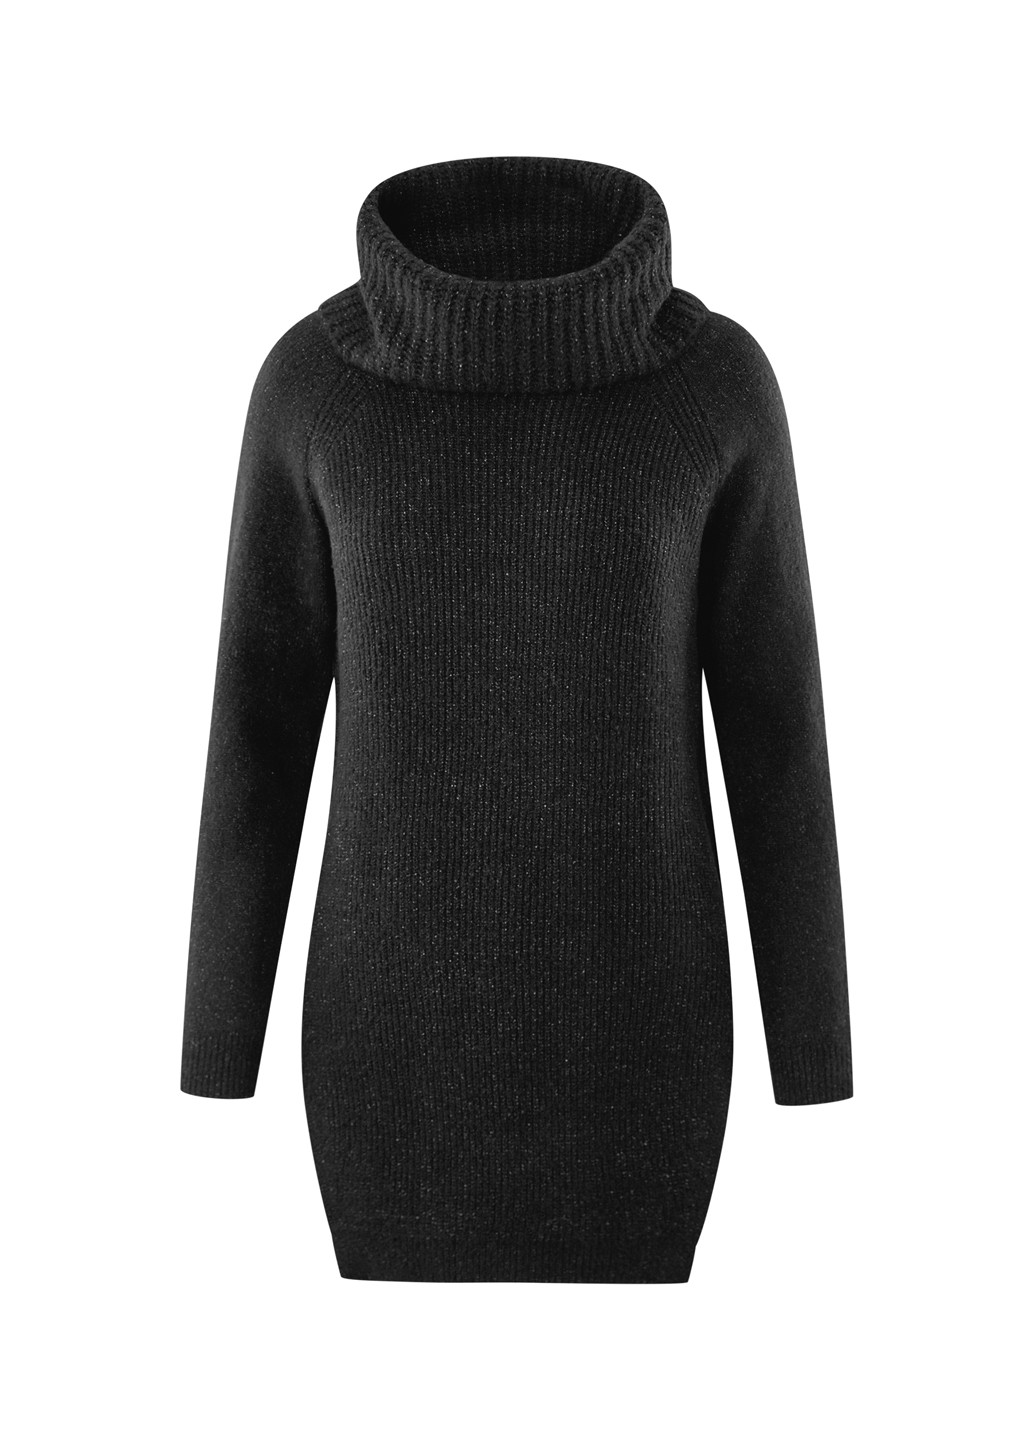 Черный зимний свитер Oodji